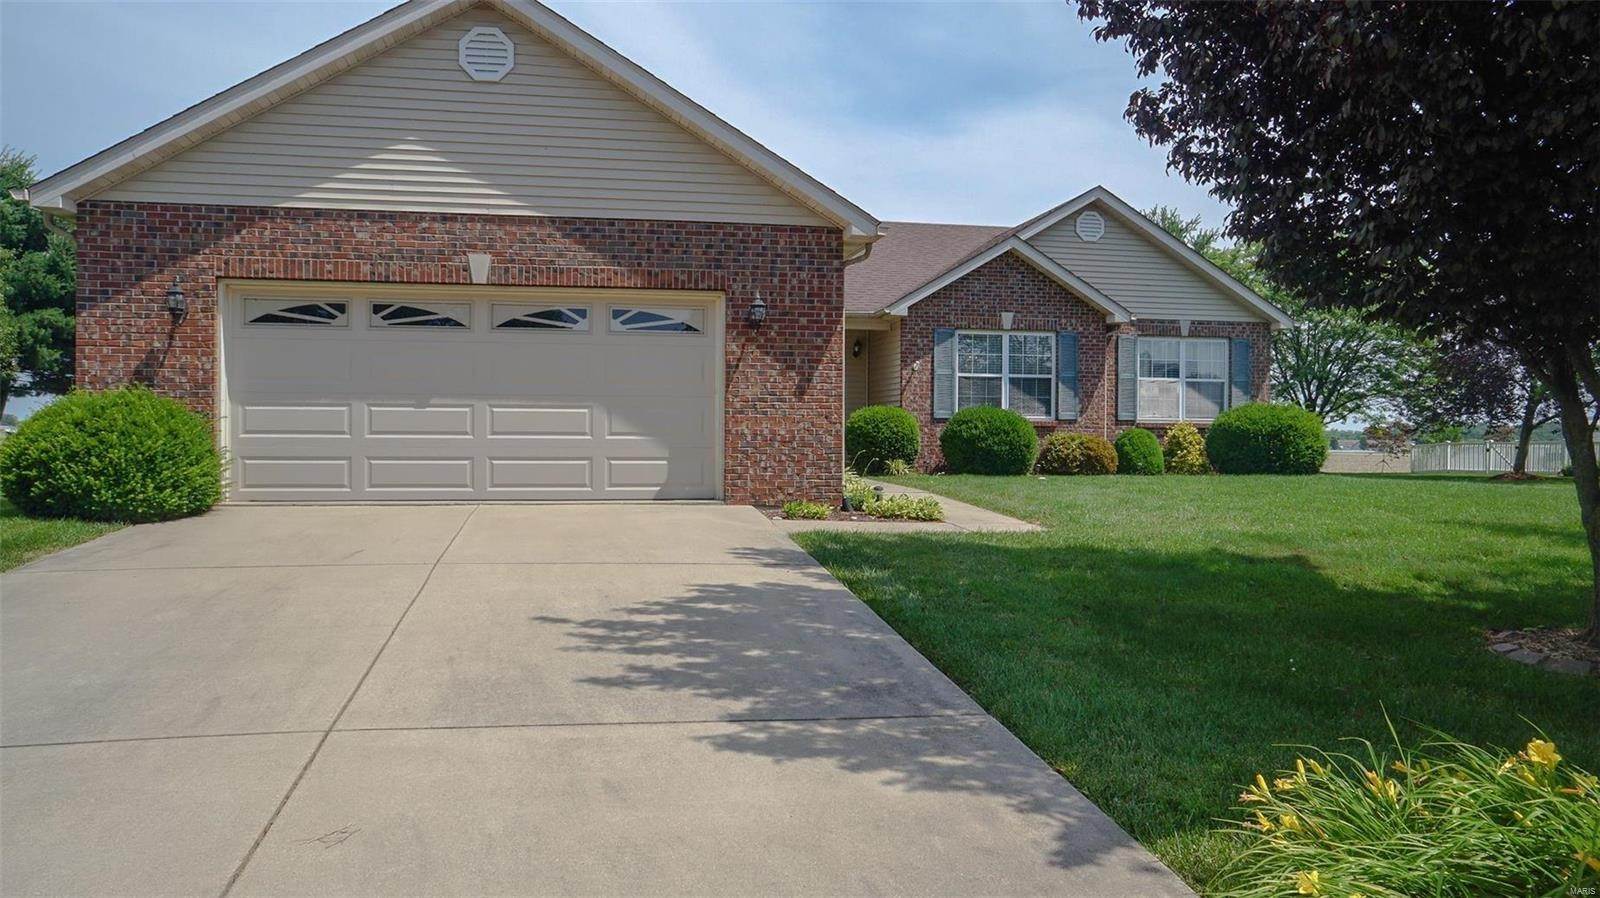 2. Single Family Homes for Sale at 5779 Stone Villa Drive Smithton, Illinois 62285 United States